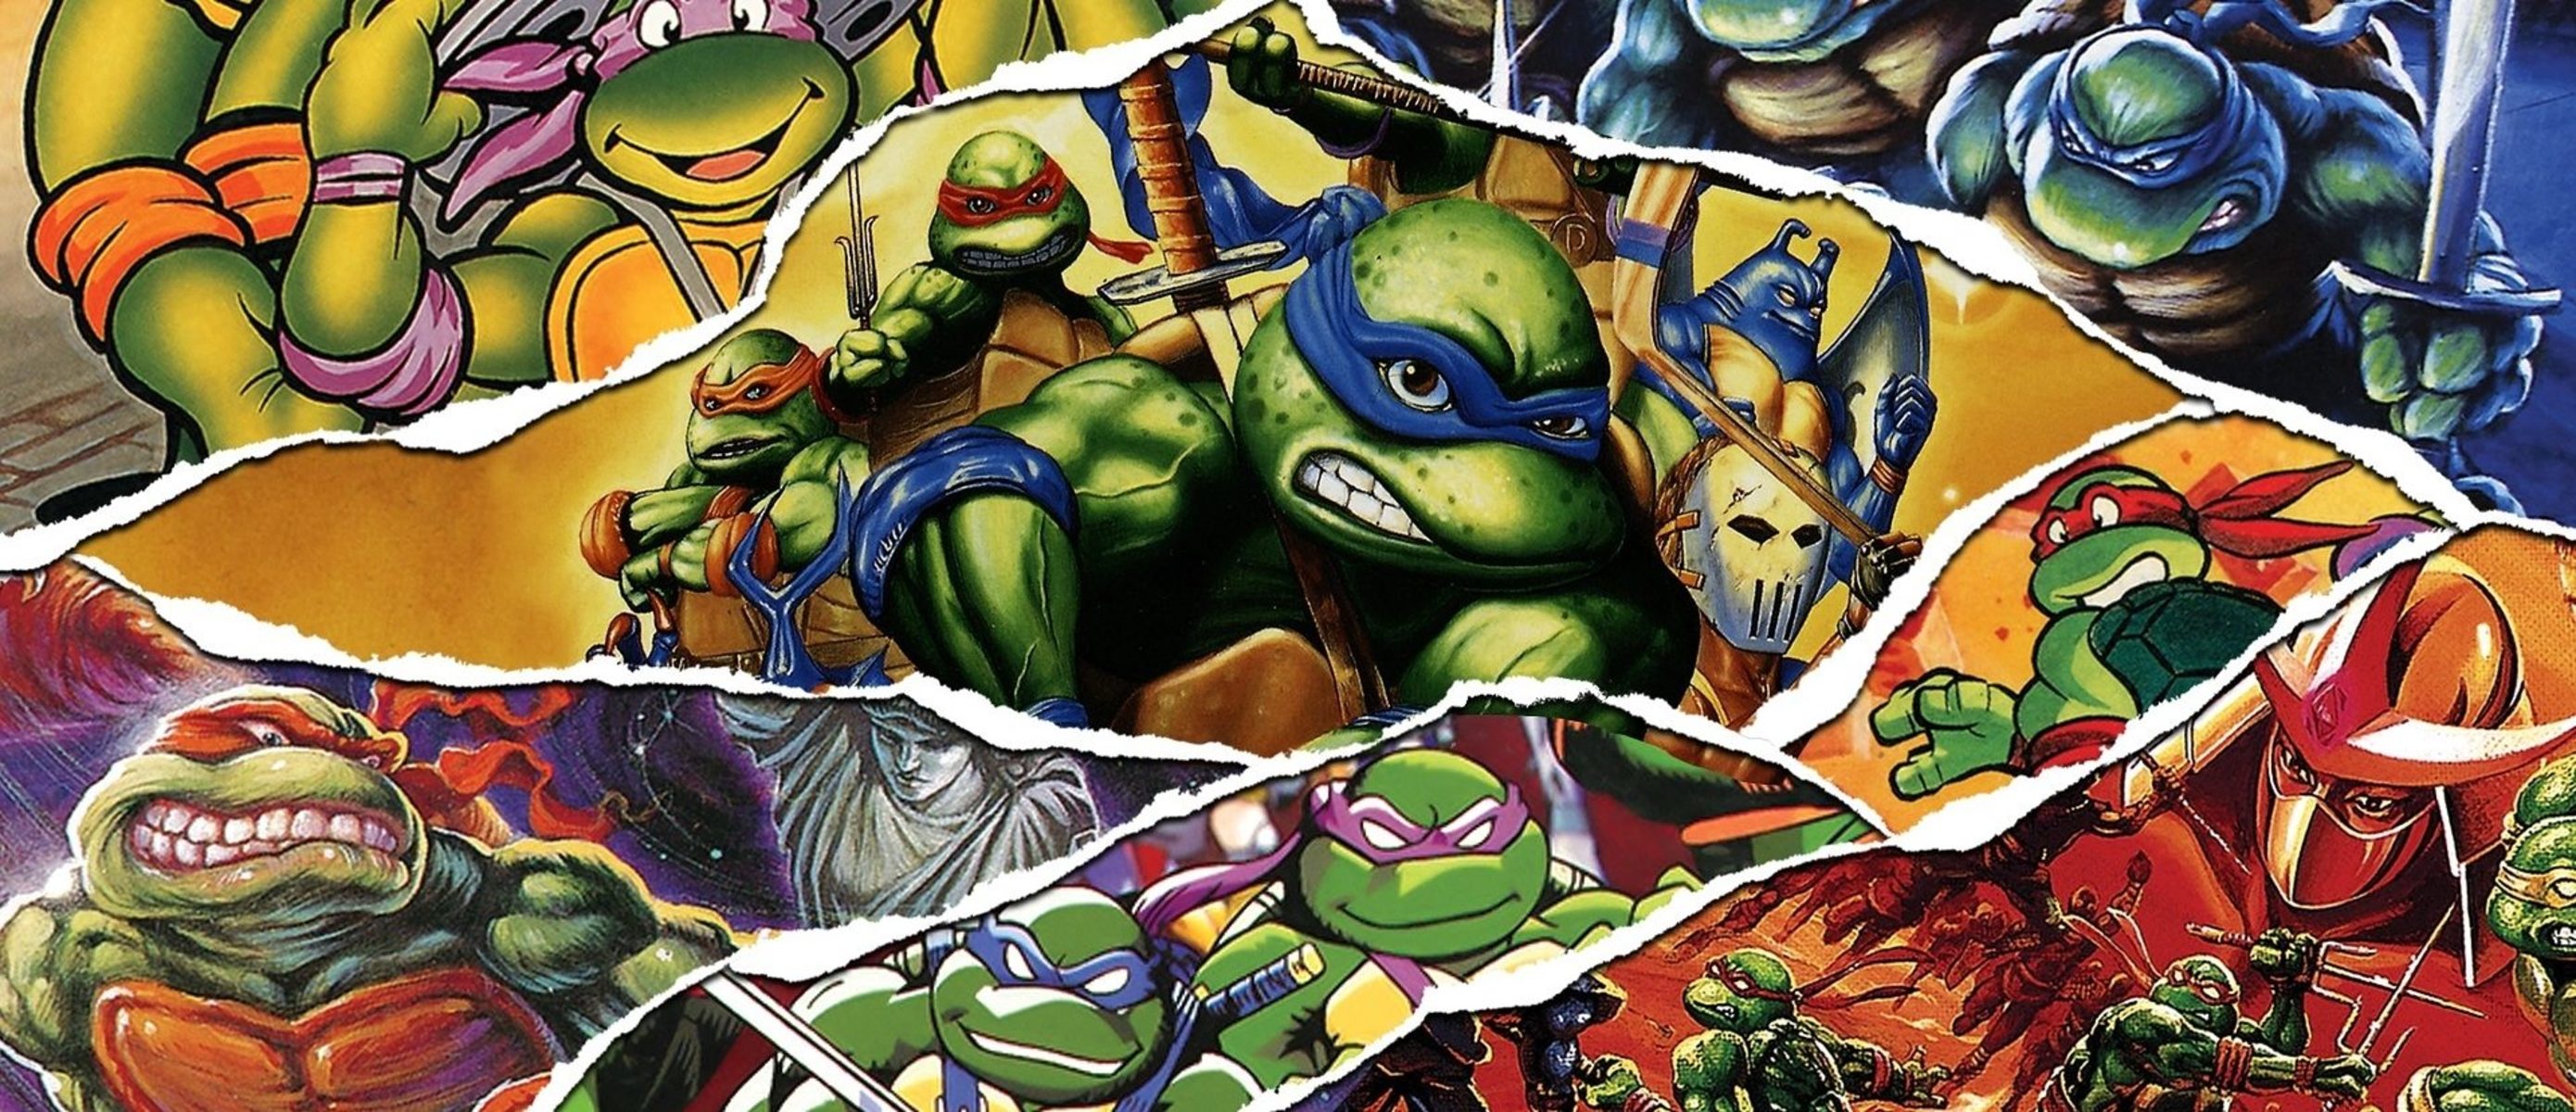 Mutant ninja turtles cowabunga collection. TMNT Cowabunga collection. Поклонники черепашек ниндзя. TMNT: the Cowabunga collection на Nintendo Switch. Teenage Mutant Ninja Turtles: the Cowabunga collection.